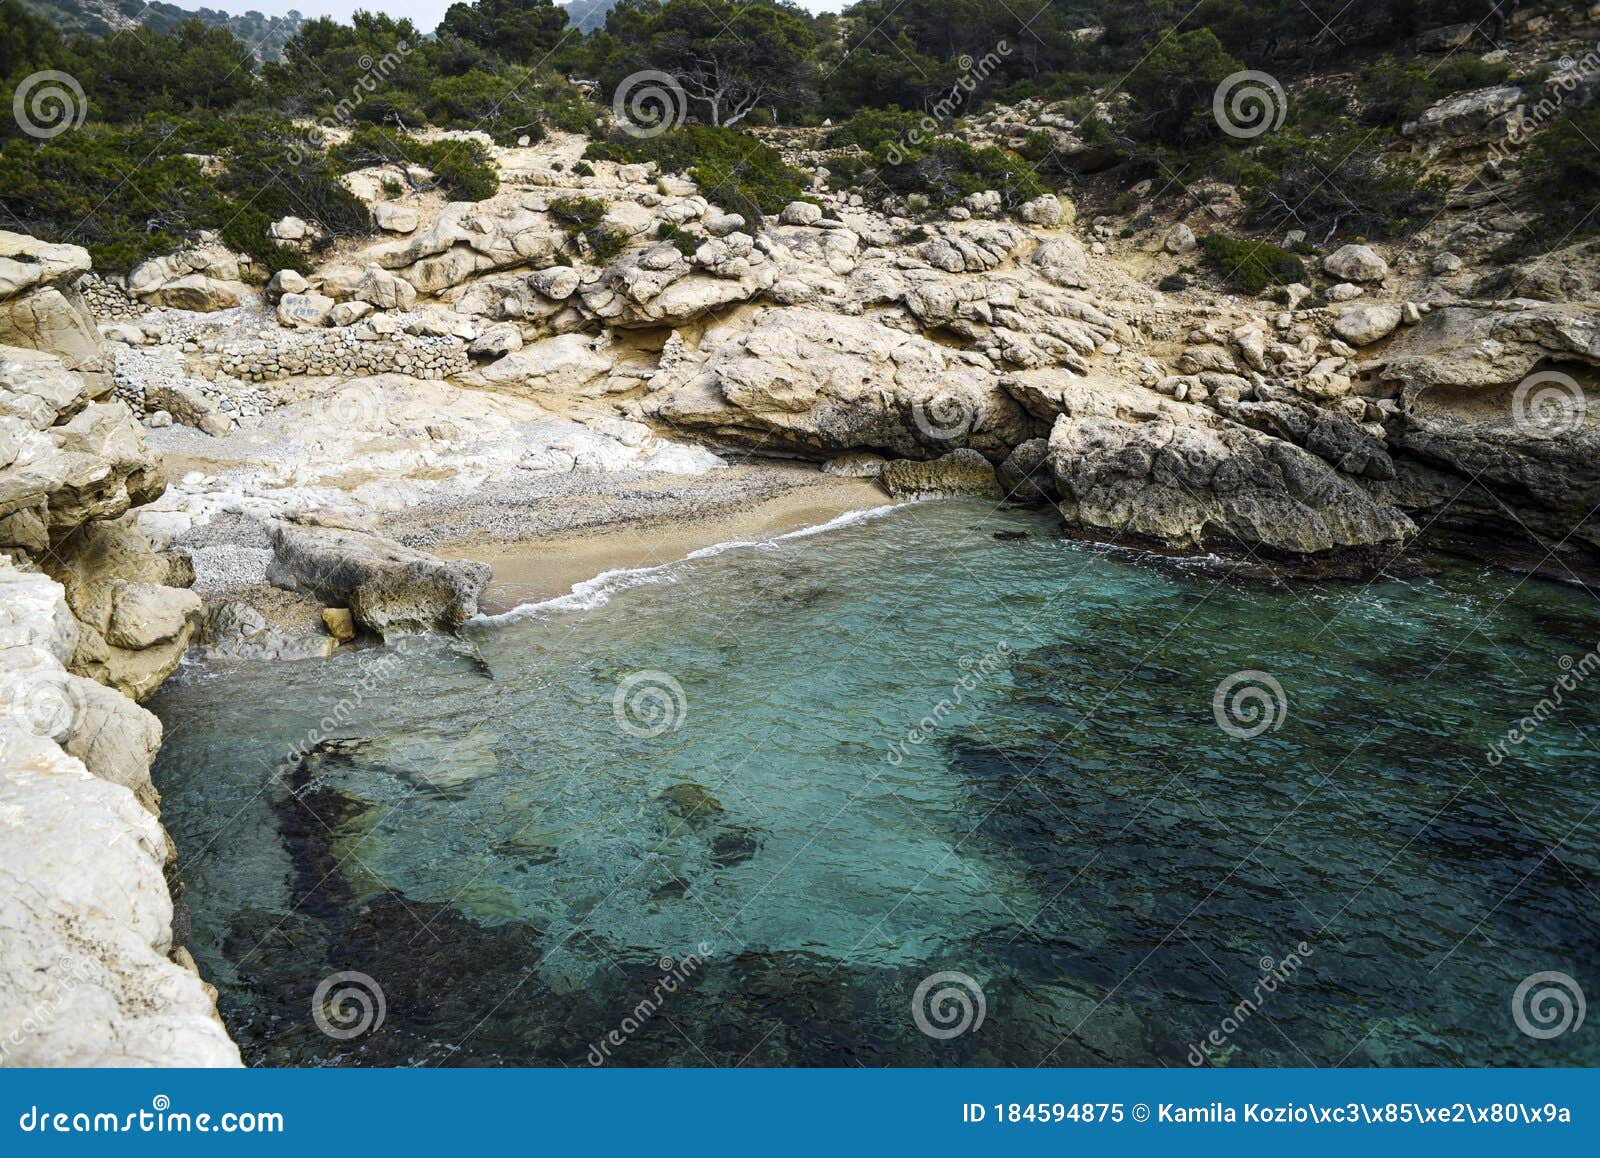 spain`s rocky coast on the mediterranean